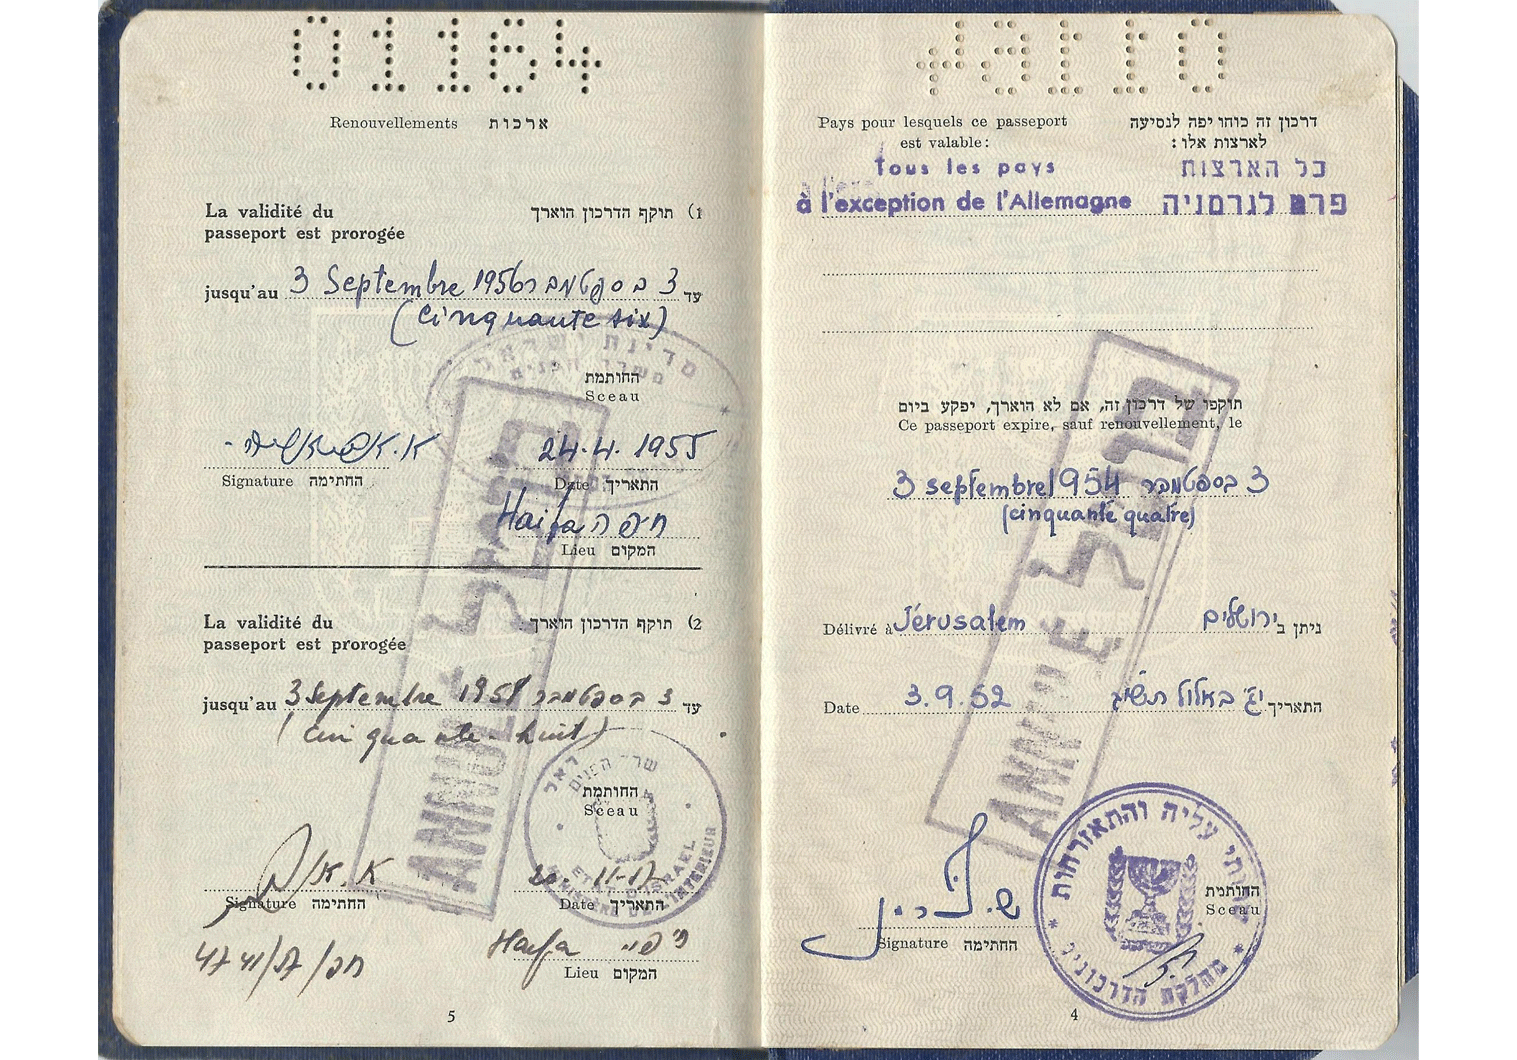 1952 Israeli passport